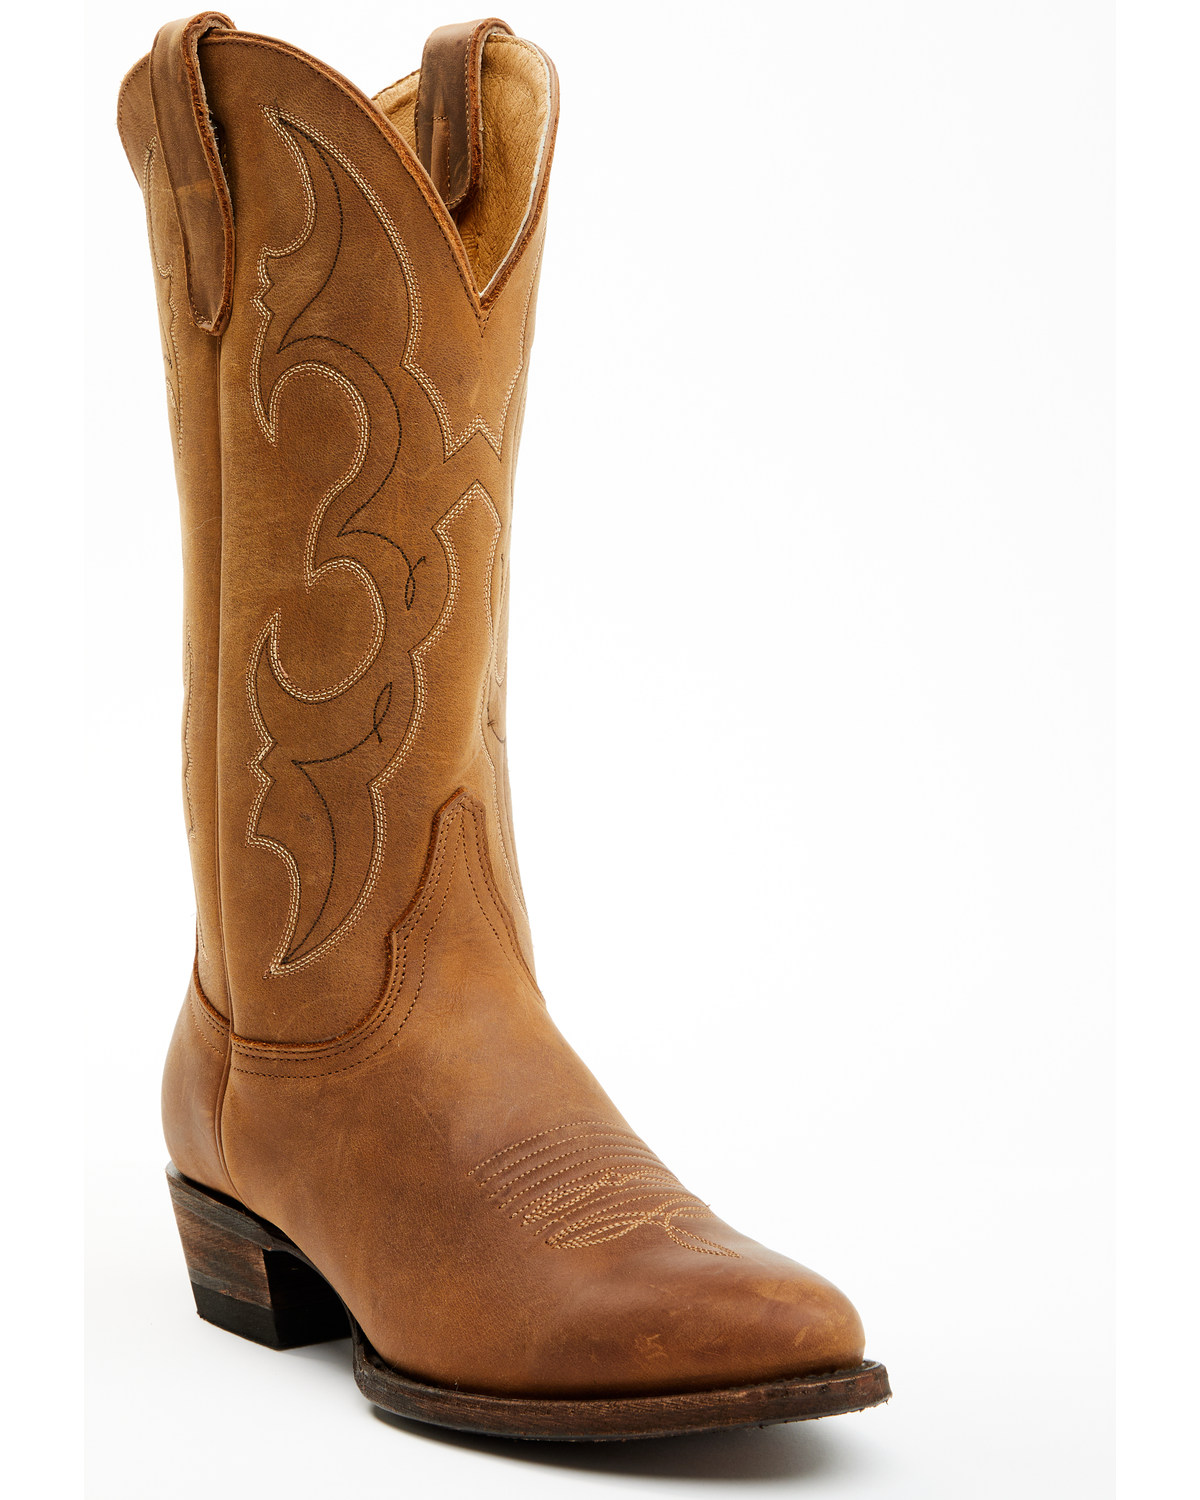 Idyllwind Women's Spit Fire Western Performance Boots - Medium Toe